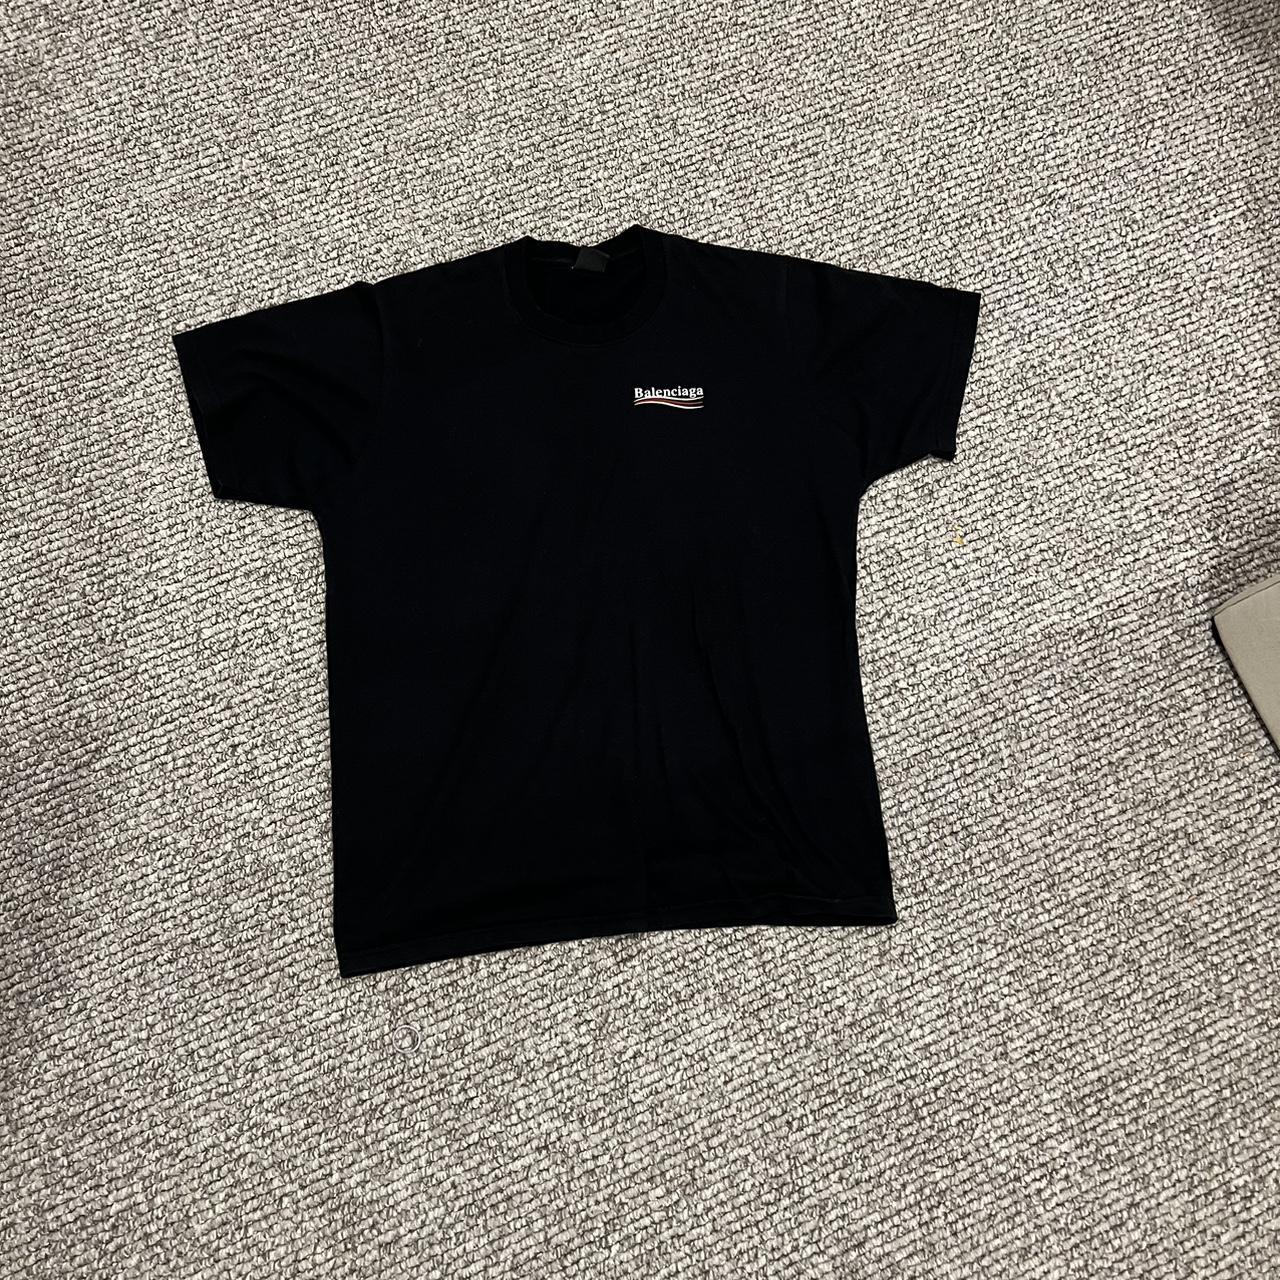 Balenciaga Tshirt L/XL - Depop